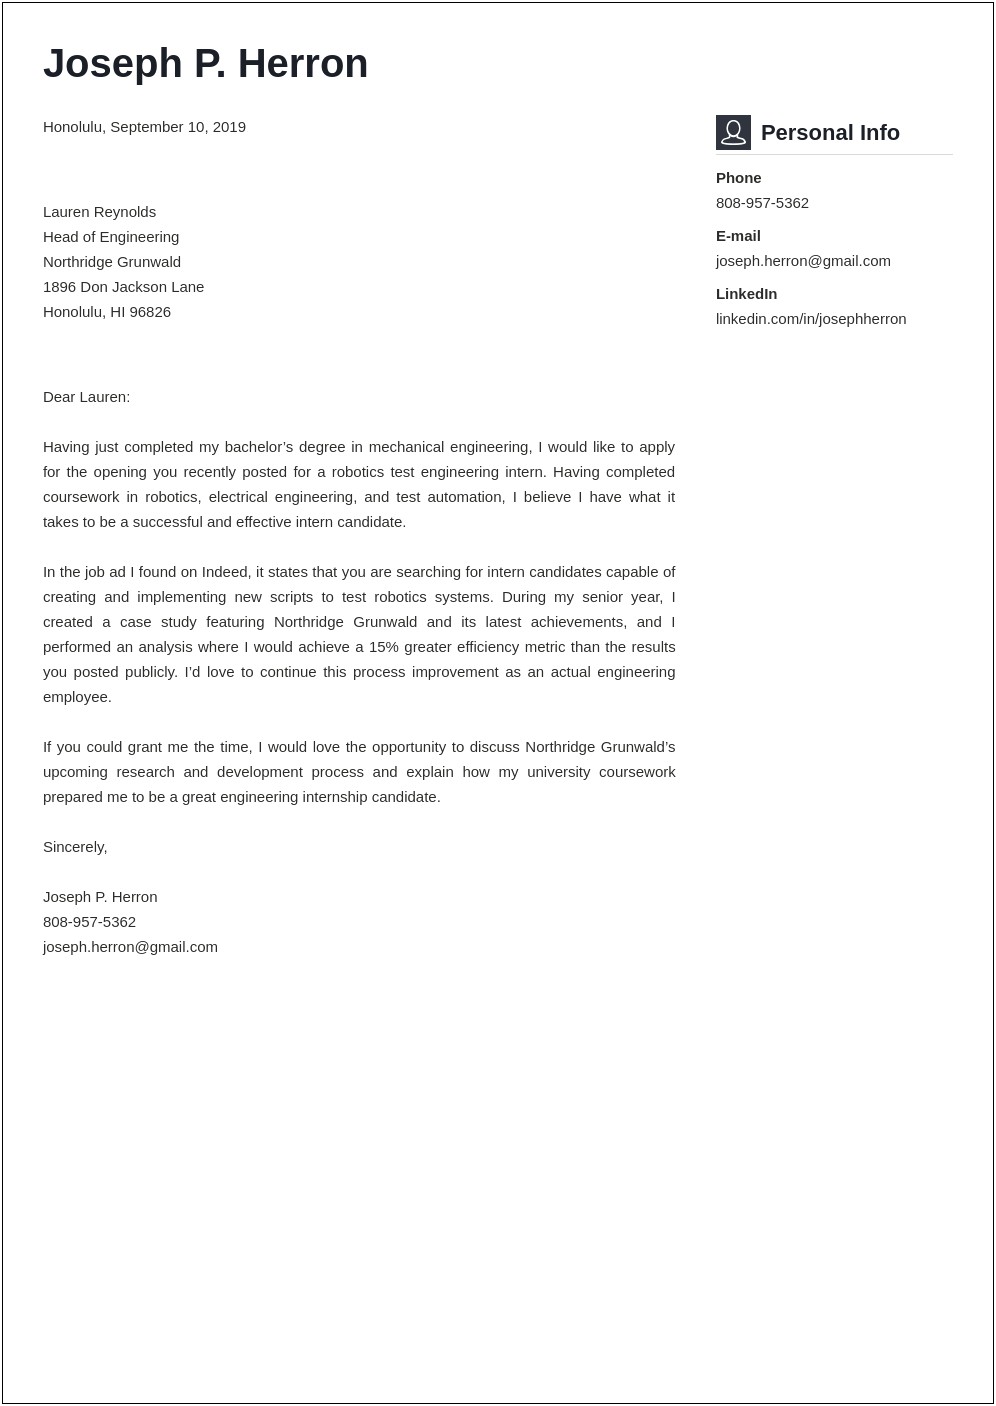 Resume Cover Letter For Engineering Job